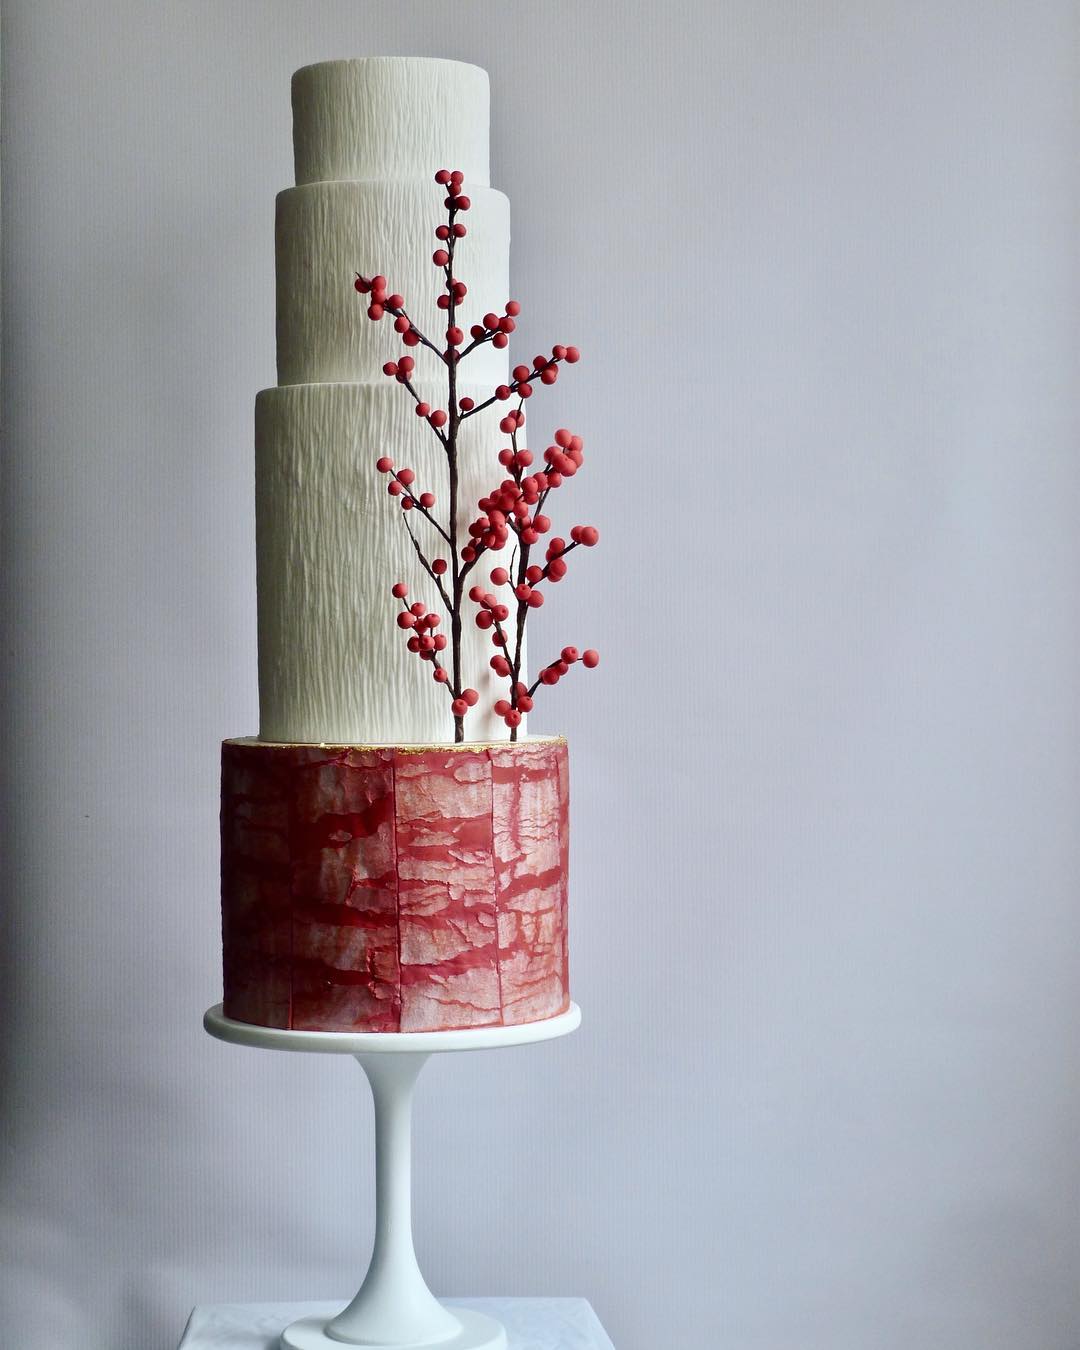 Winter Wedding Cakes ideas!